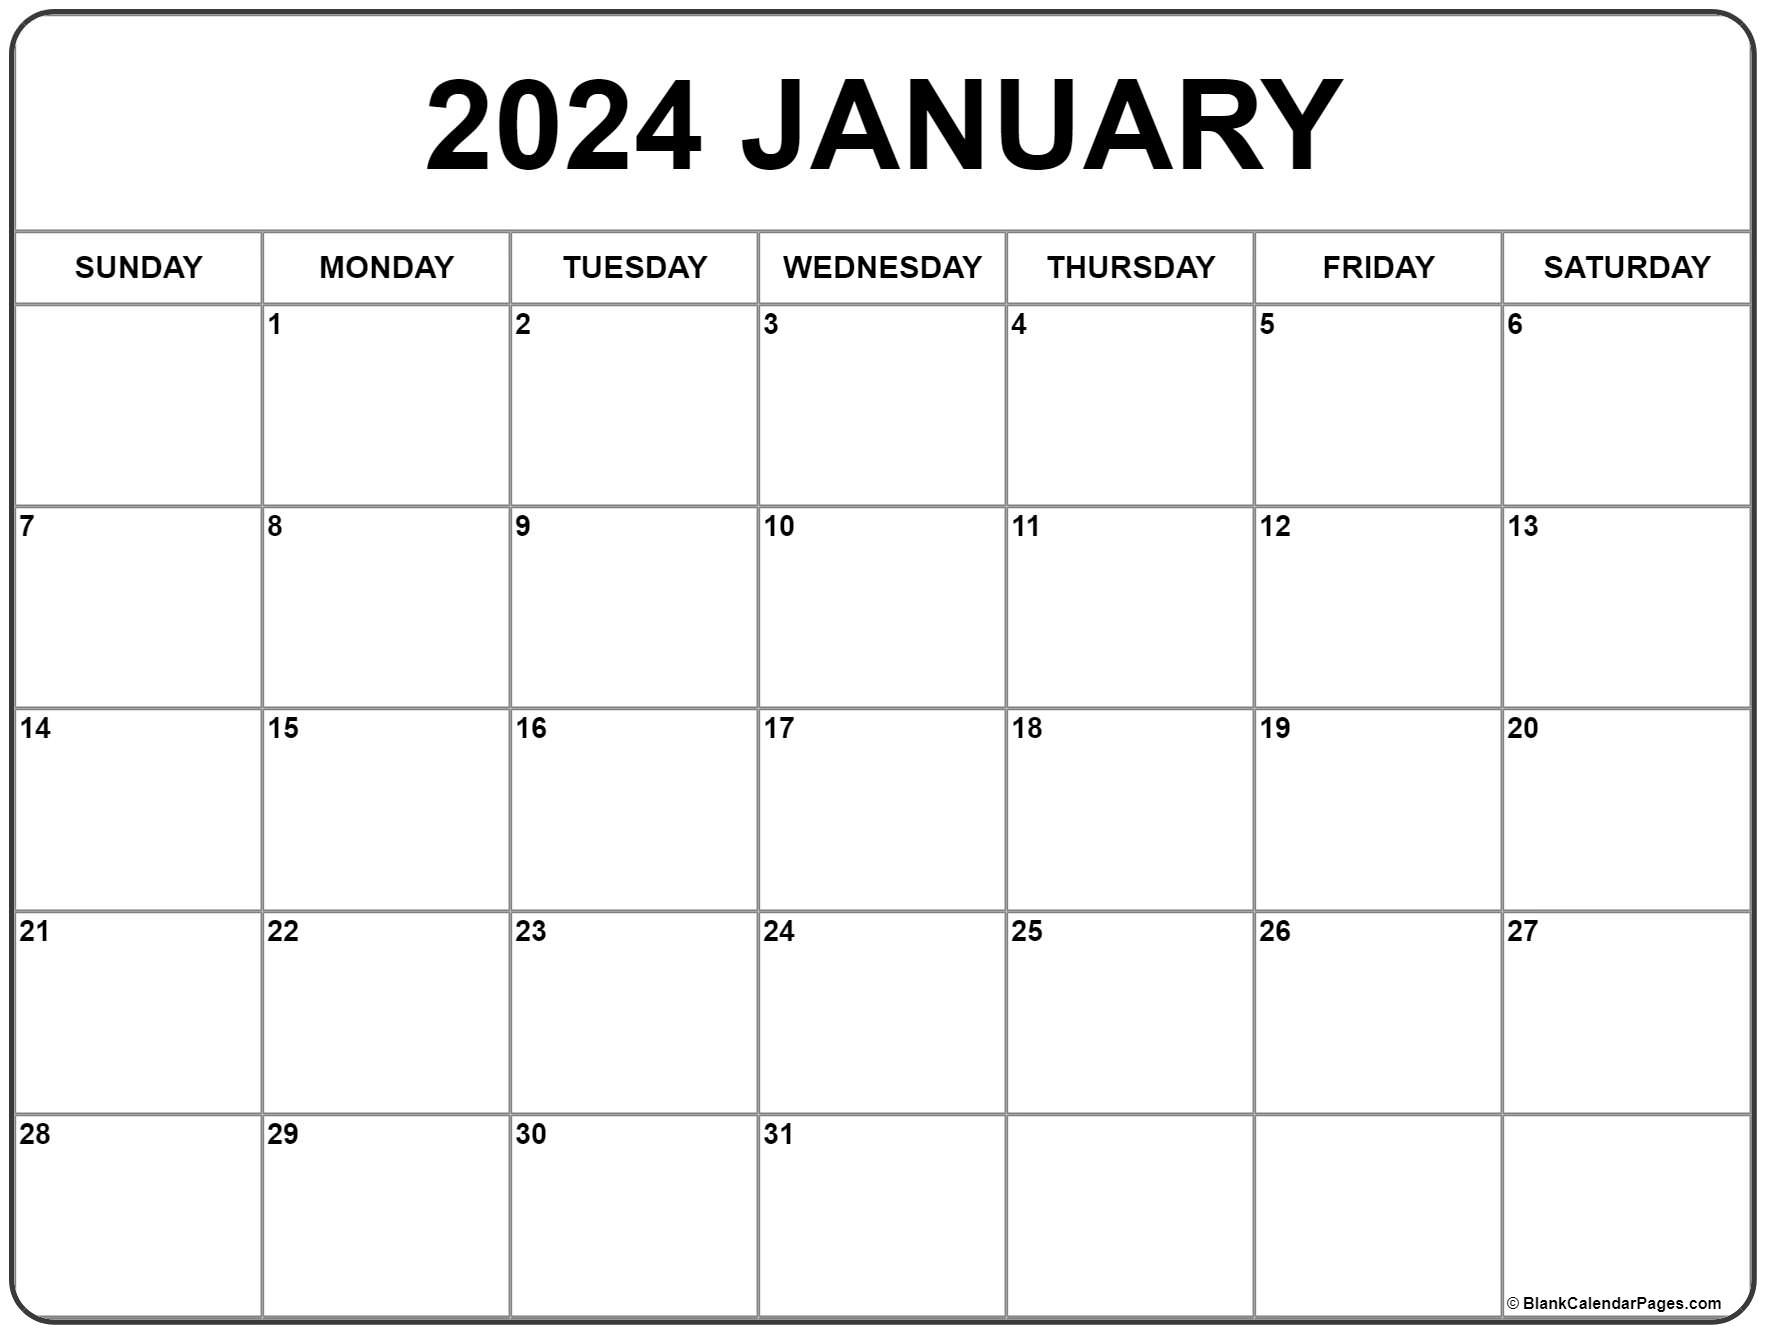 January 2024 Calendar | Free Printable Calendar for Blank January 2024 Calendar Printable Free